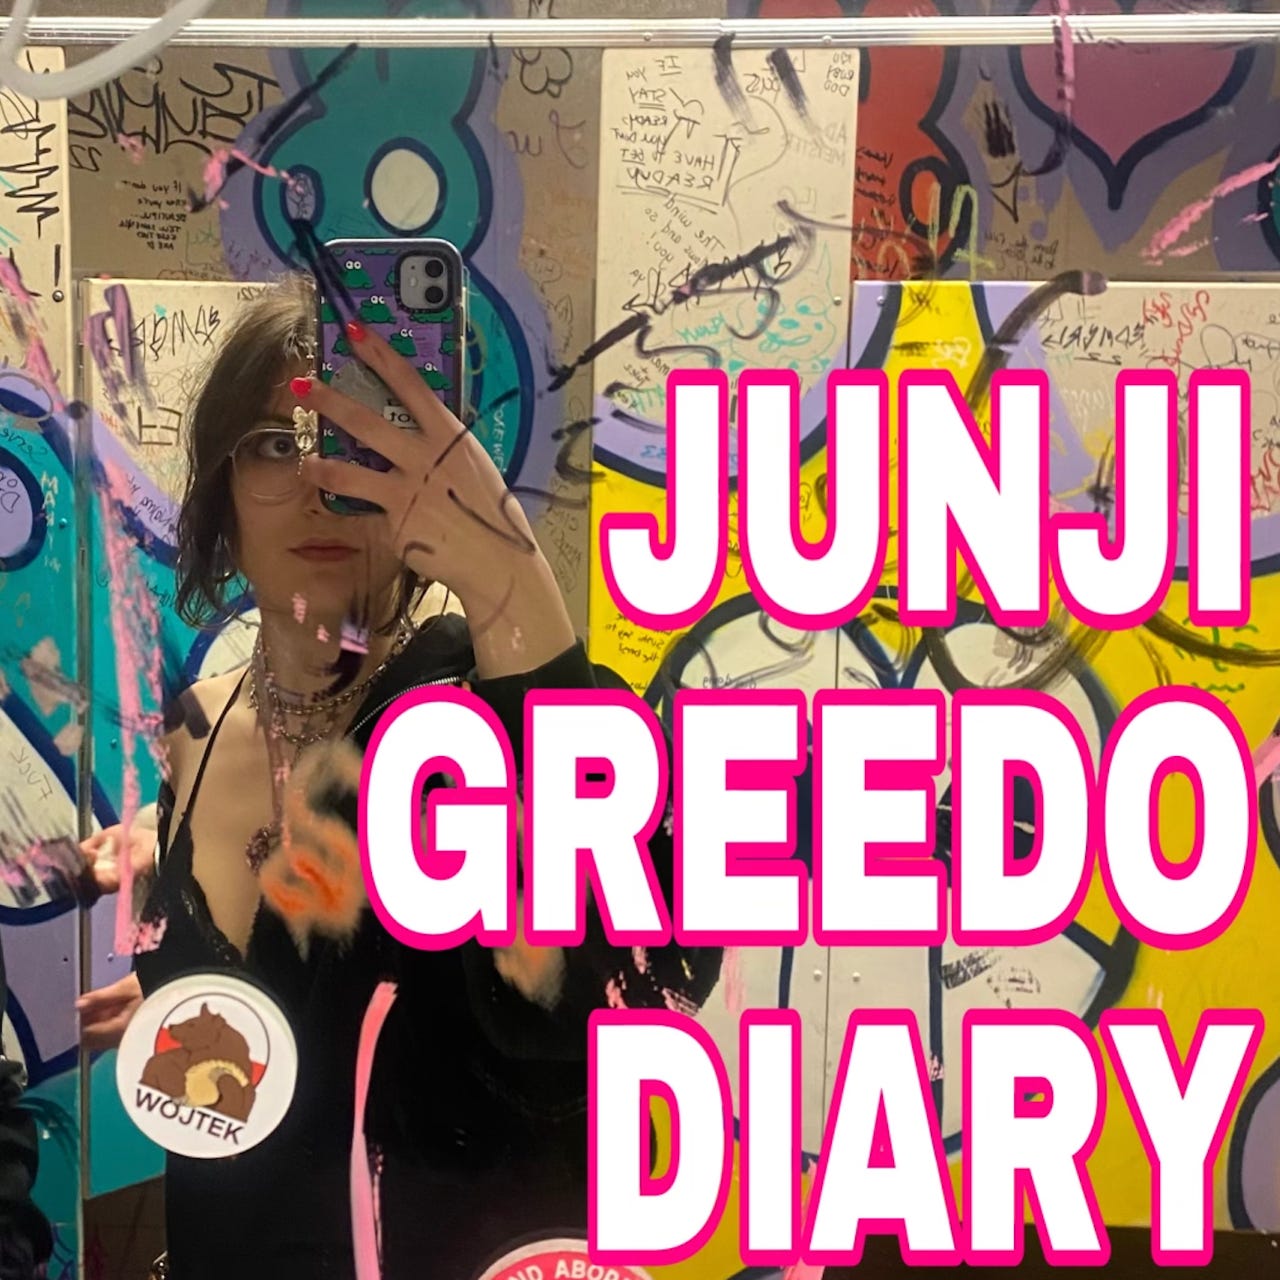 junji greedo diary